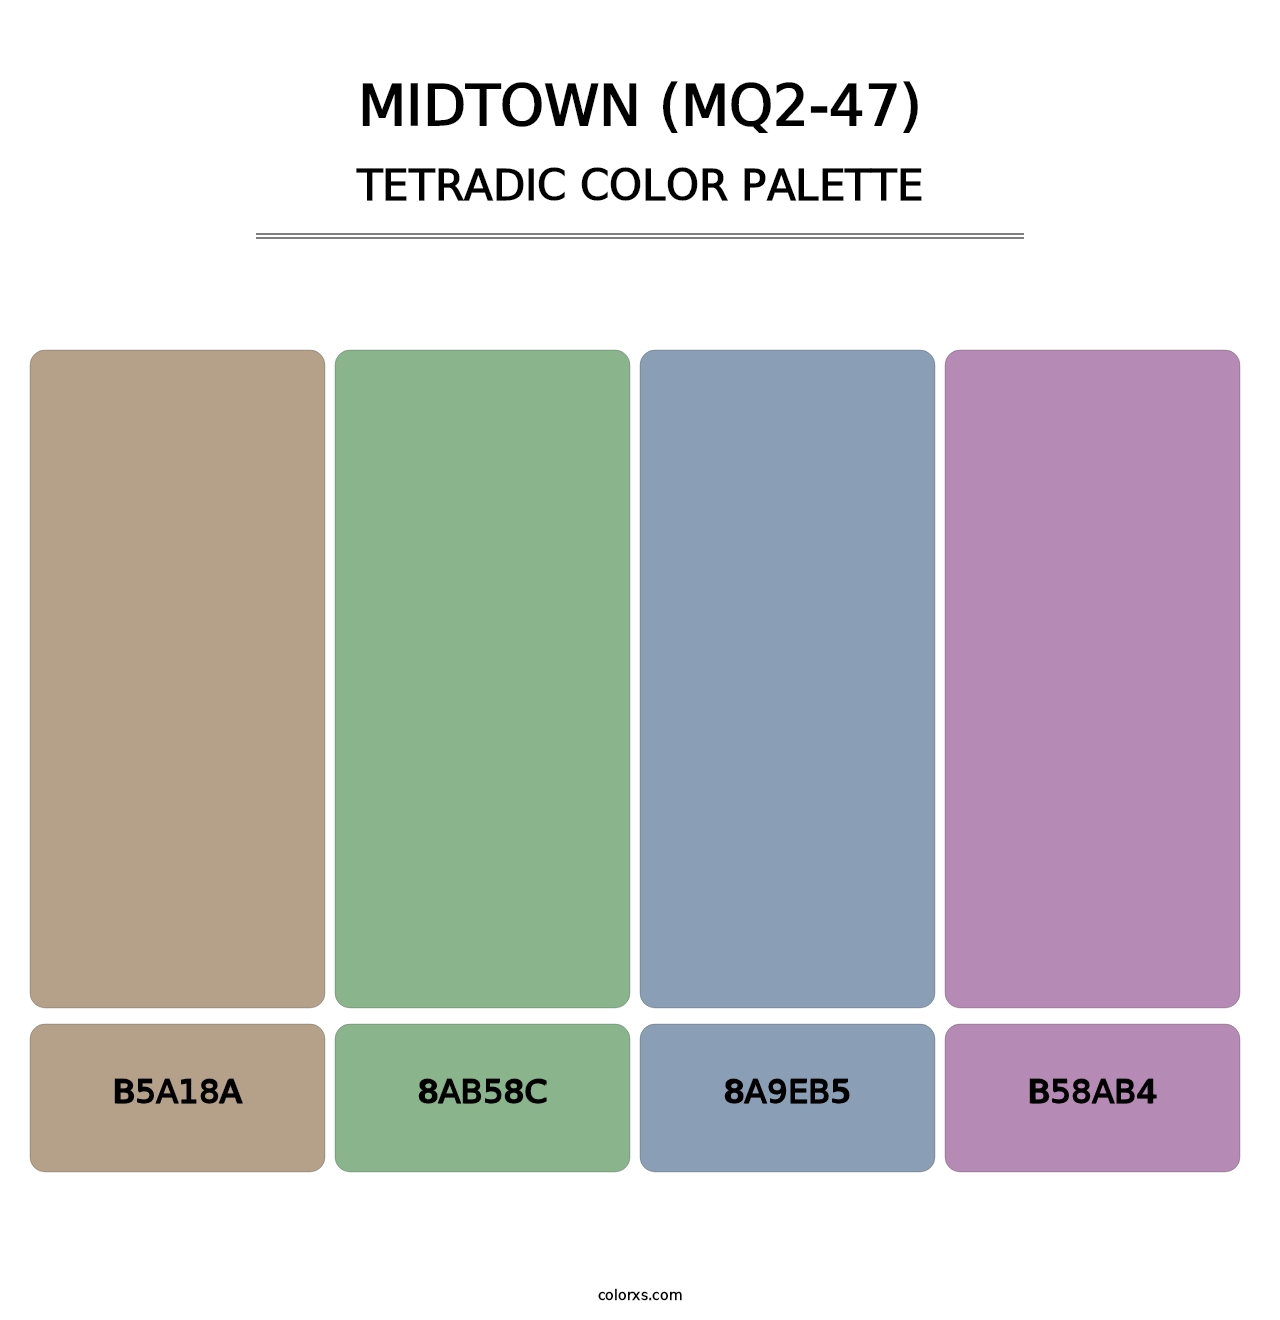 Midtown (MQ2-47) - Tetradic Color Palette